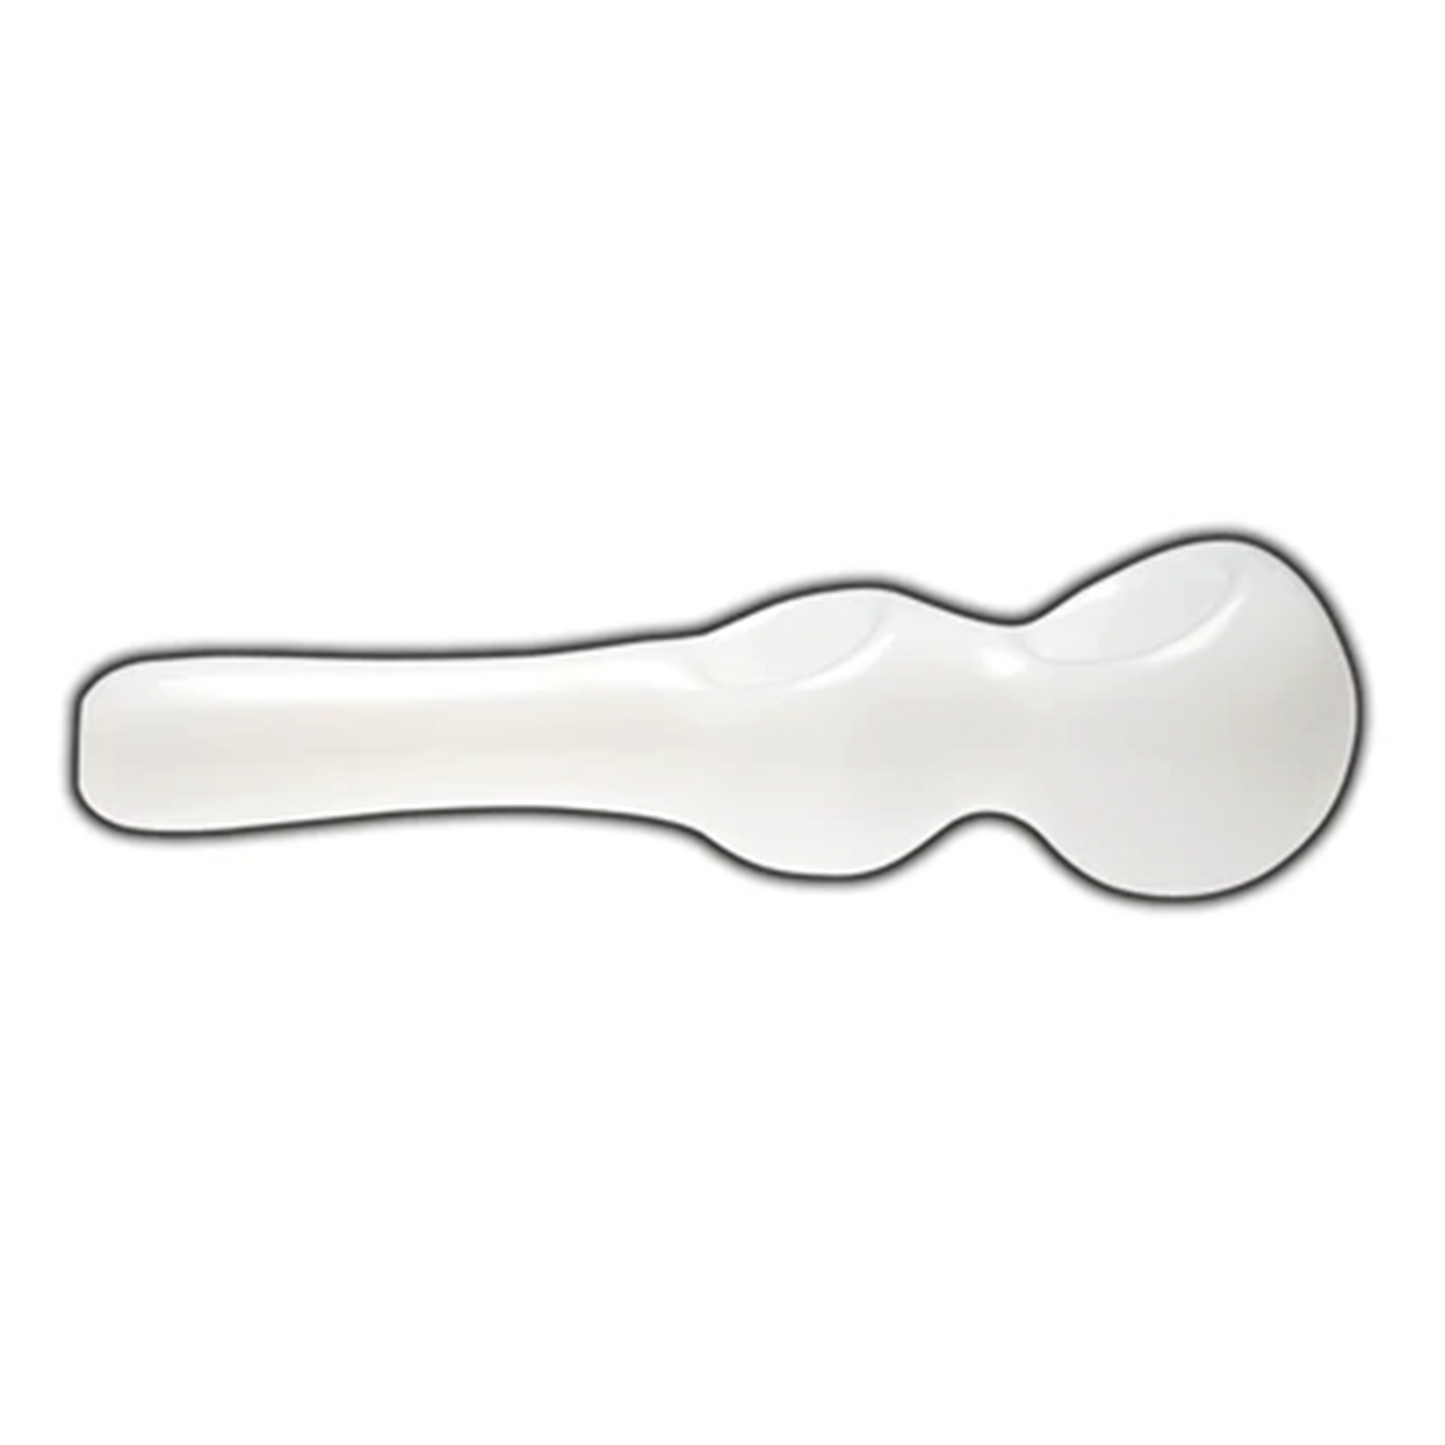 2X Bowl Spoon